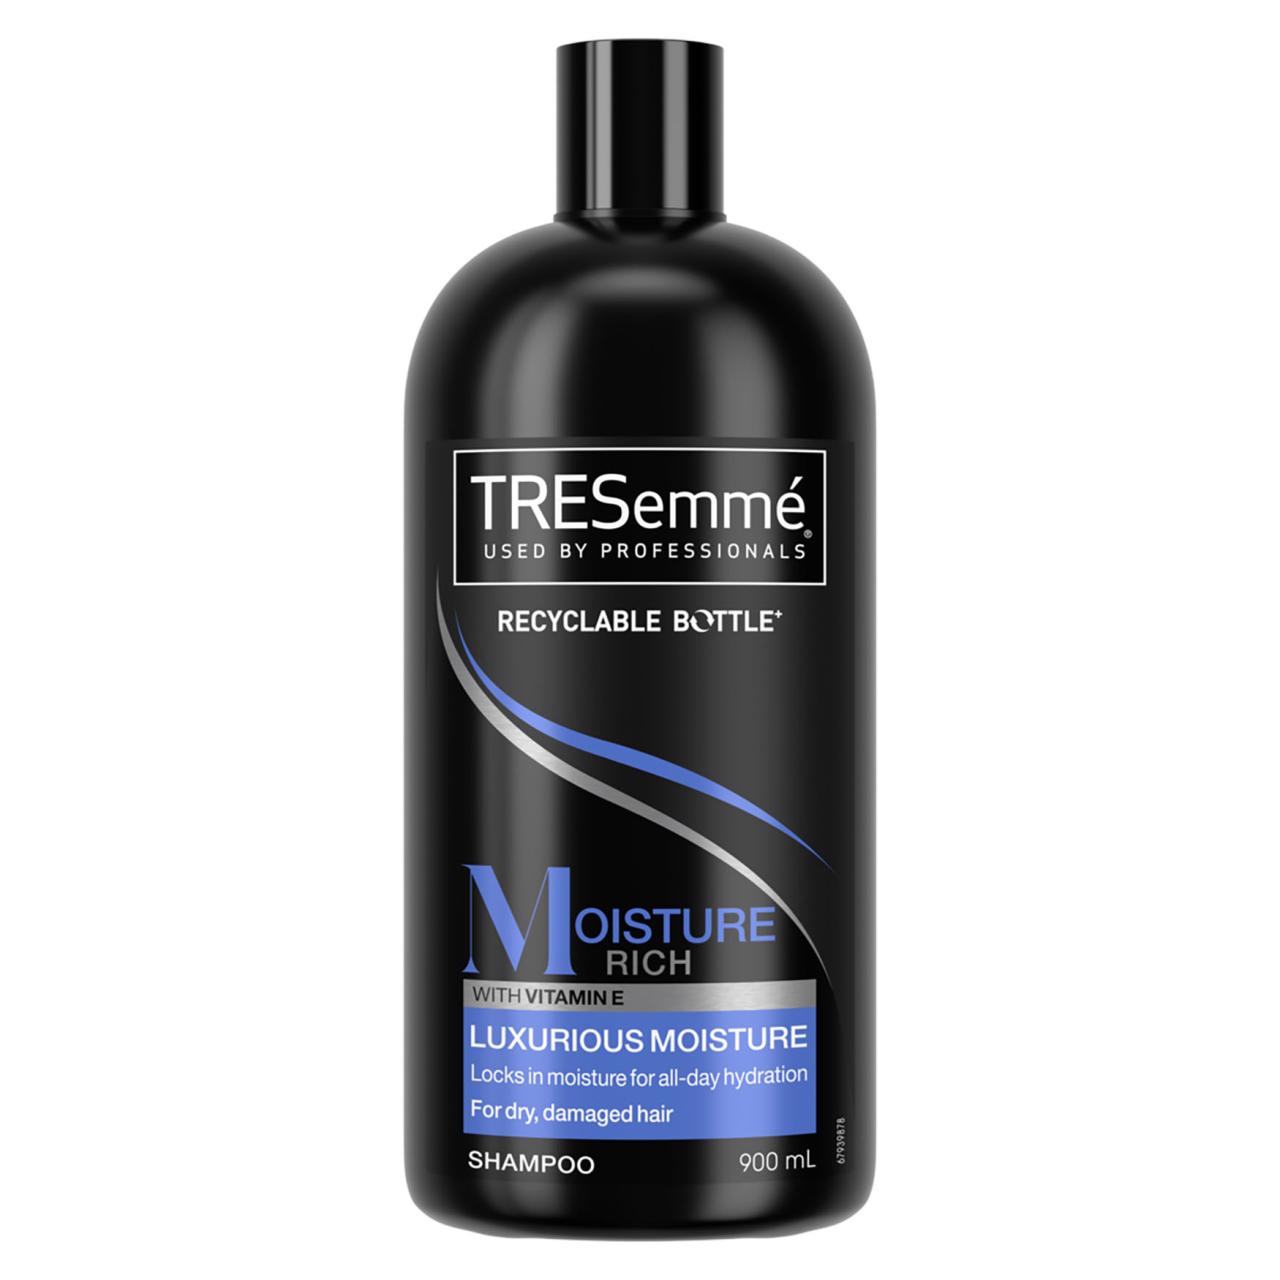 TRESemme Shampoo Luxurious Moisture 900ml